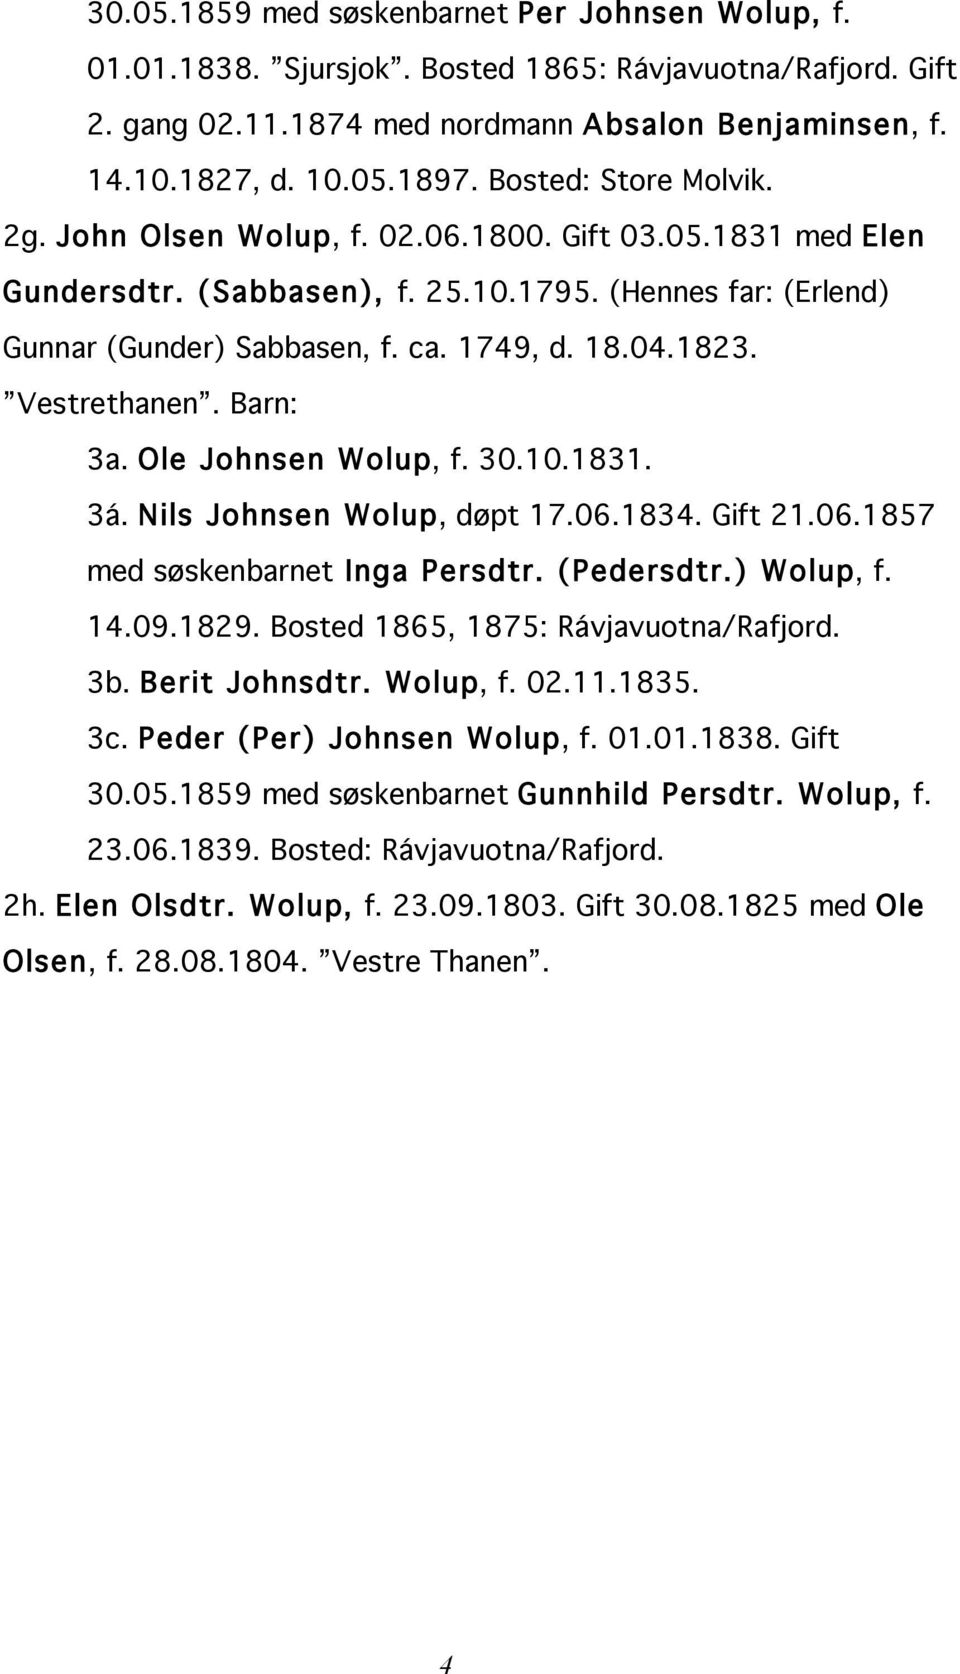 Vestrethanen. Barn: 3a. Ole Johnsen Wolup, f. 30.10.1831. 3á. Nils Johnsen Wolup, døpt 17.06.1834. Gift 21.06.1857 med søskenbarnet Inga Persdtr. (Pedersdtr.) Wolup, f. 14.09.1829.